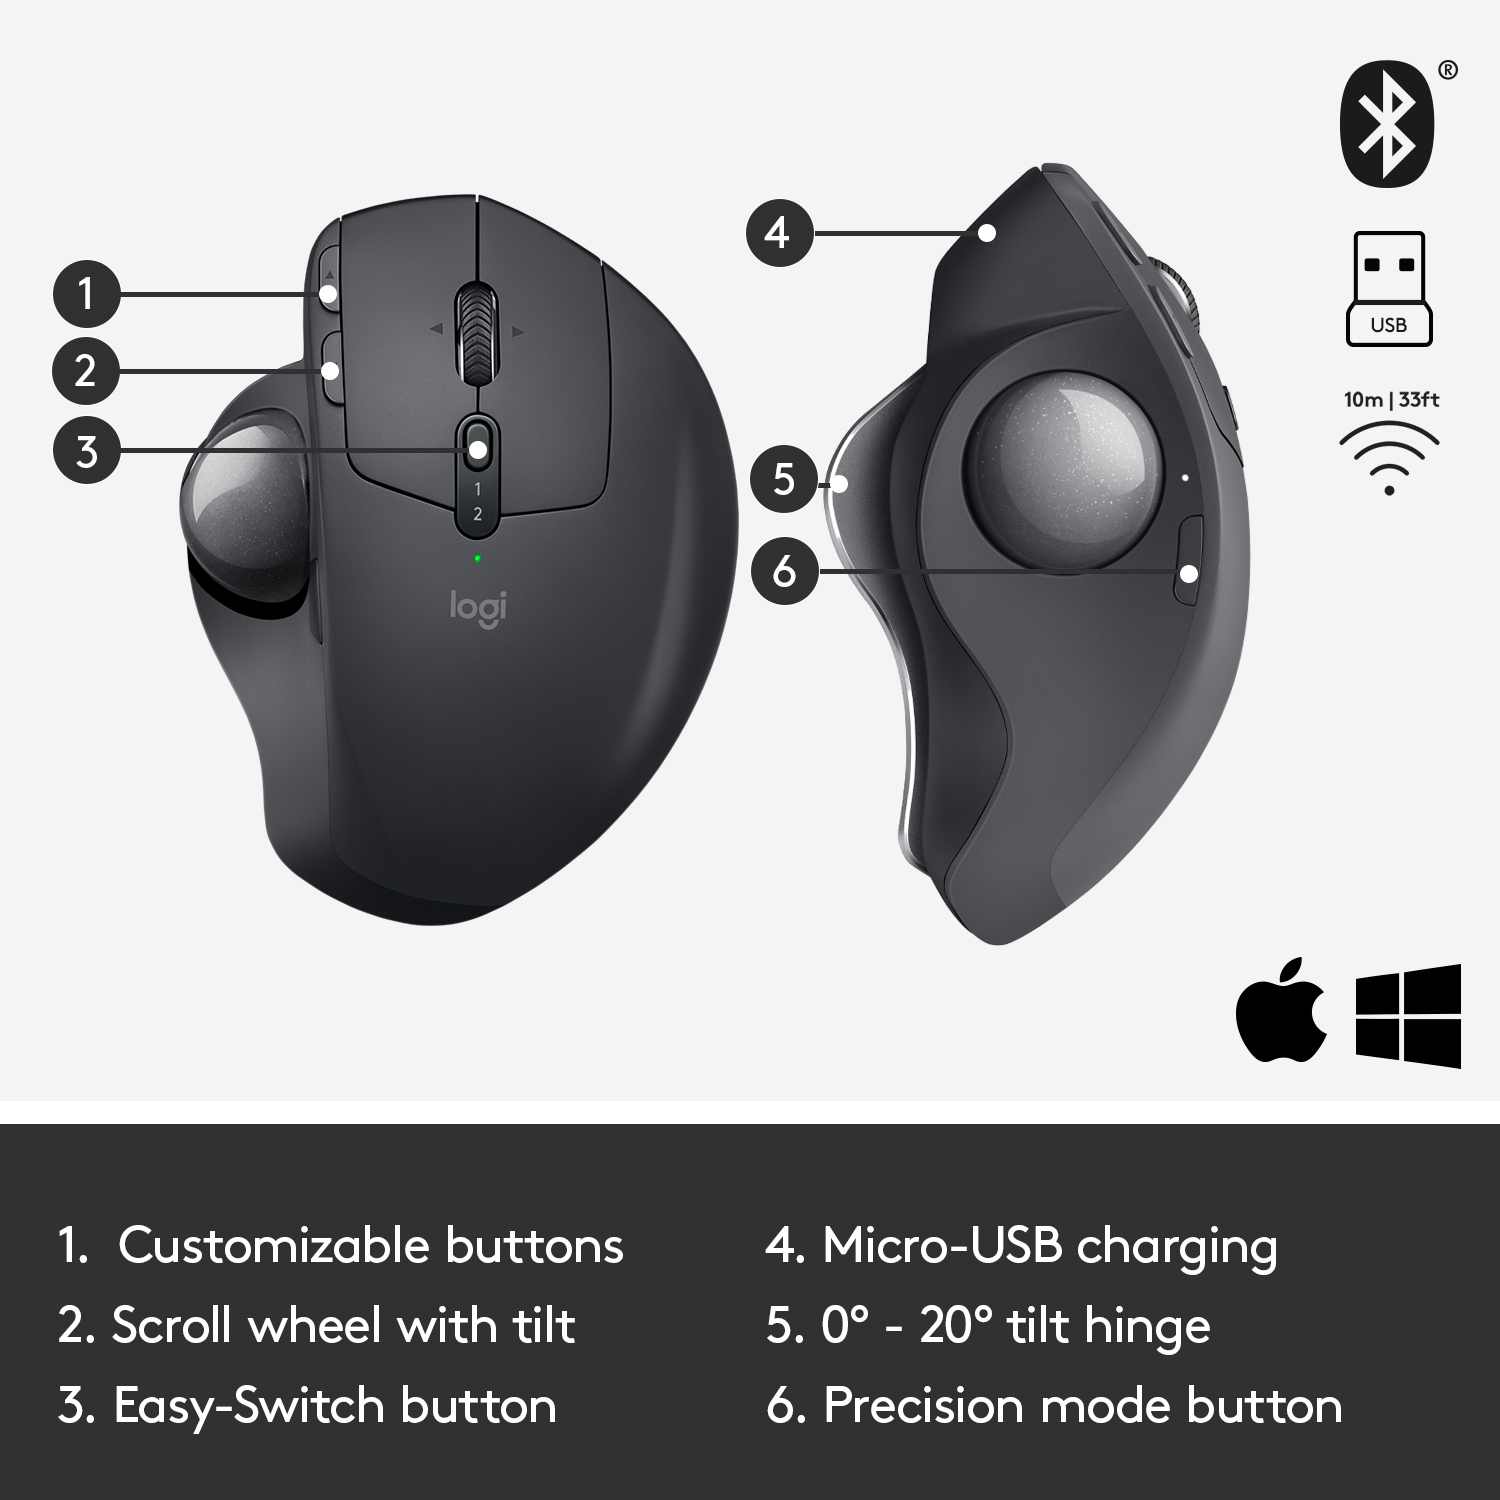 Logitech ERGO M575 Wireless Trackball Mouse with Ergonomic Design